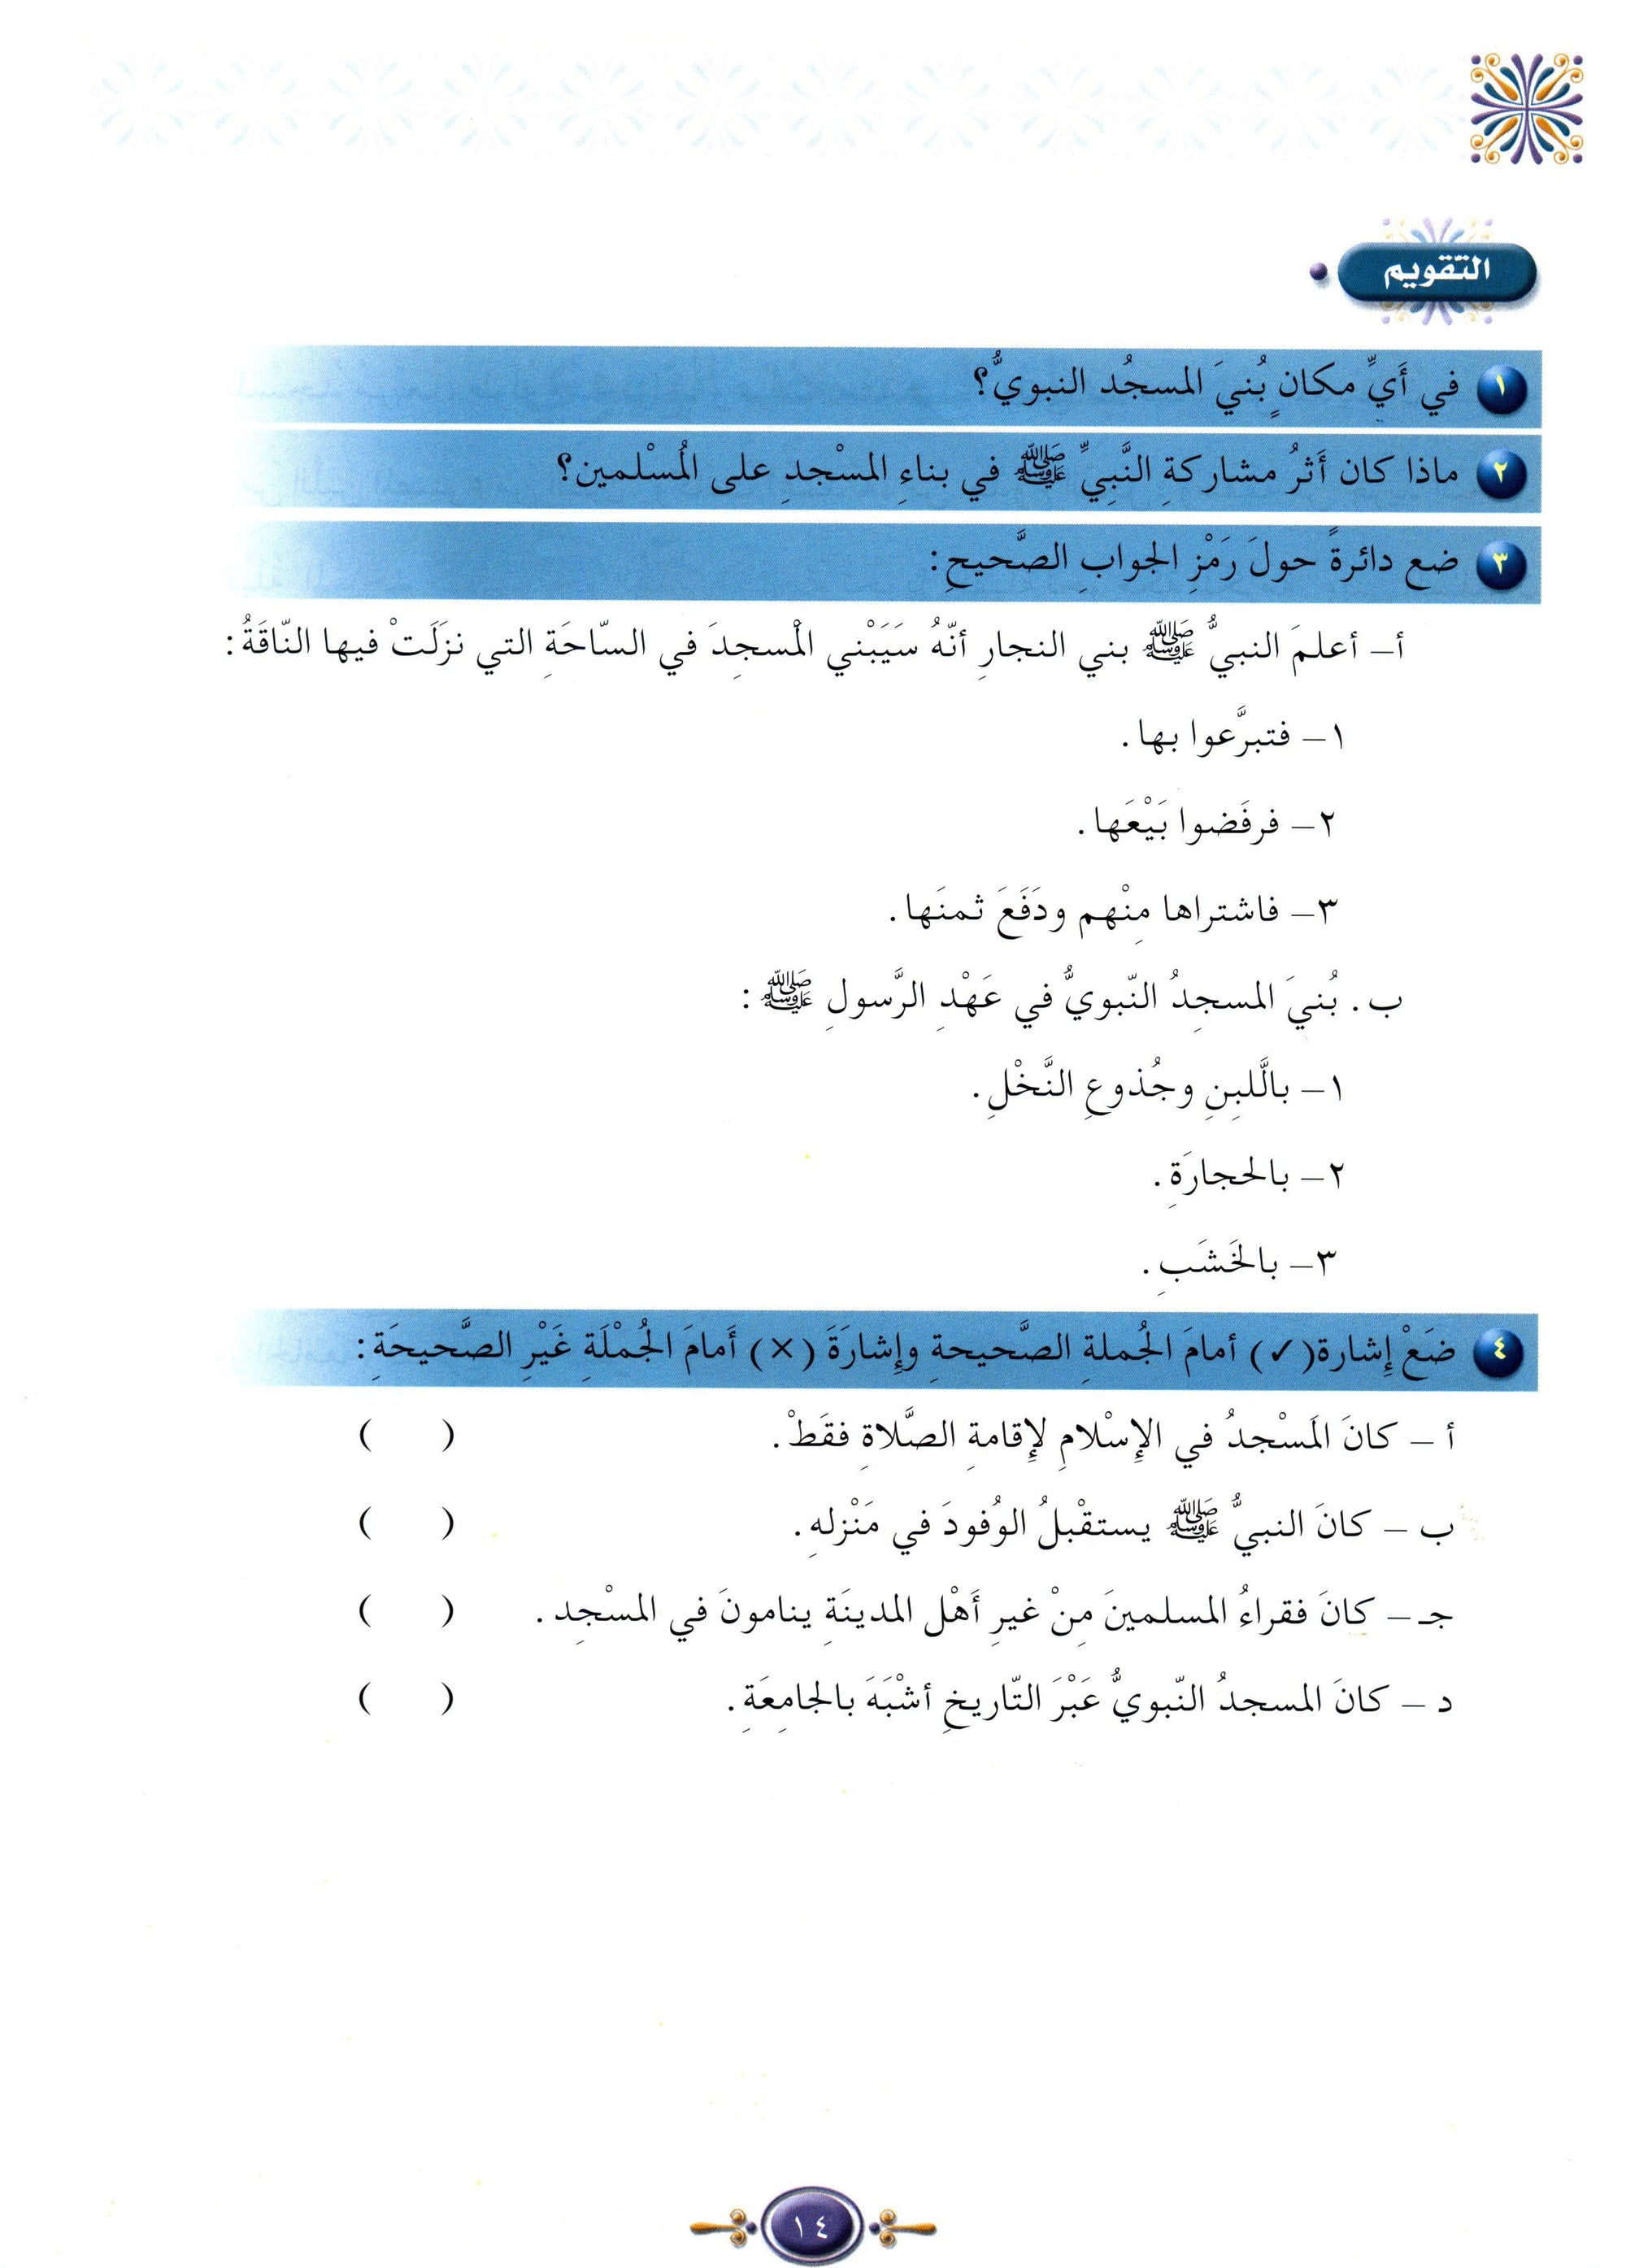 Islamic Knowledge Series - Biography of the Prophet Life in Madinah سلسلة العلوم الإسلامية السيرة النبوية العهد المدني